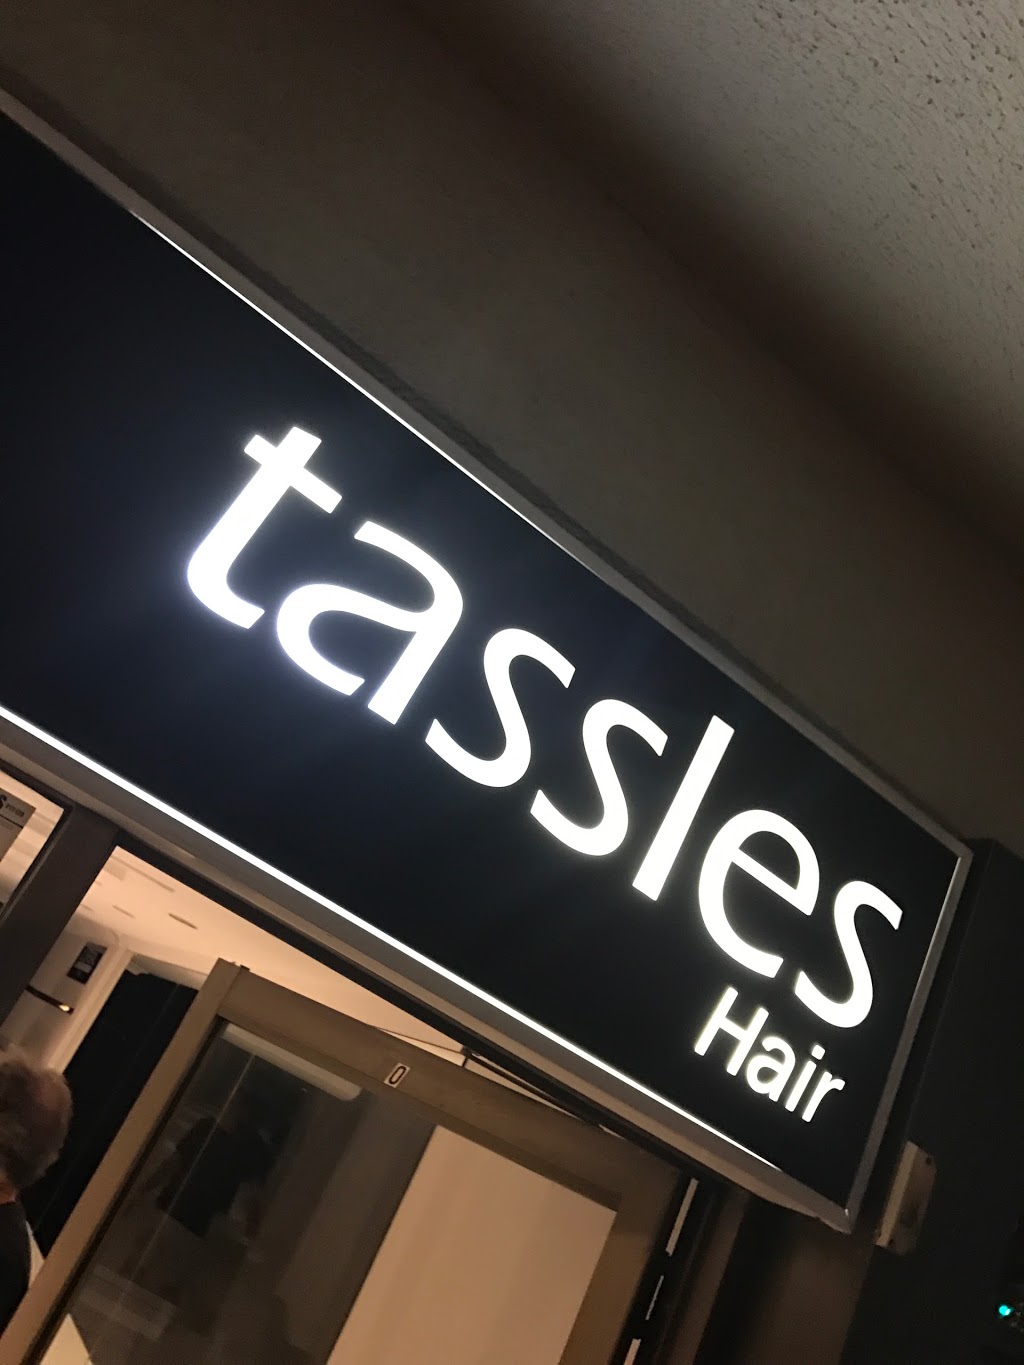 Tassles Hair | hair care | 50/314-324 Bay St, Brighton-Le-Sands NSW 2216, Australia | 0295679053 OR +61 2 9567 9053